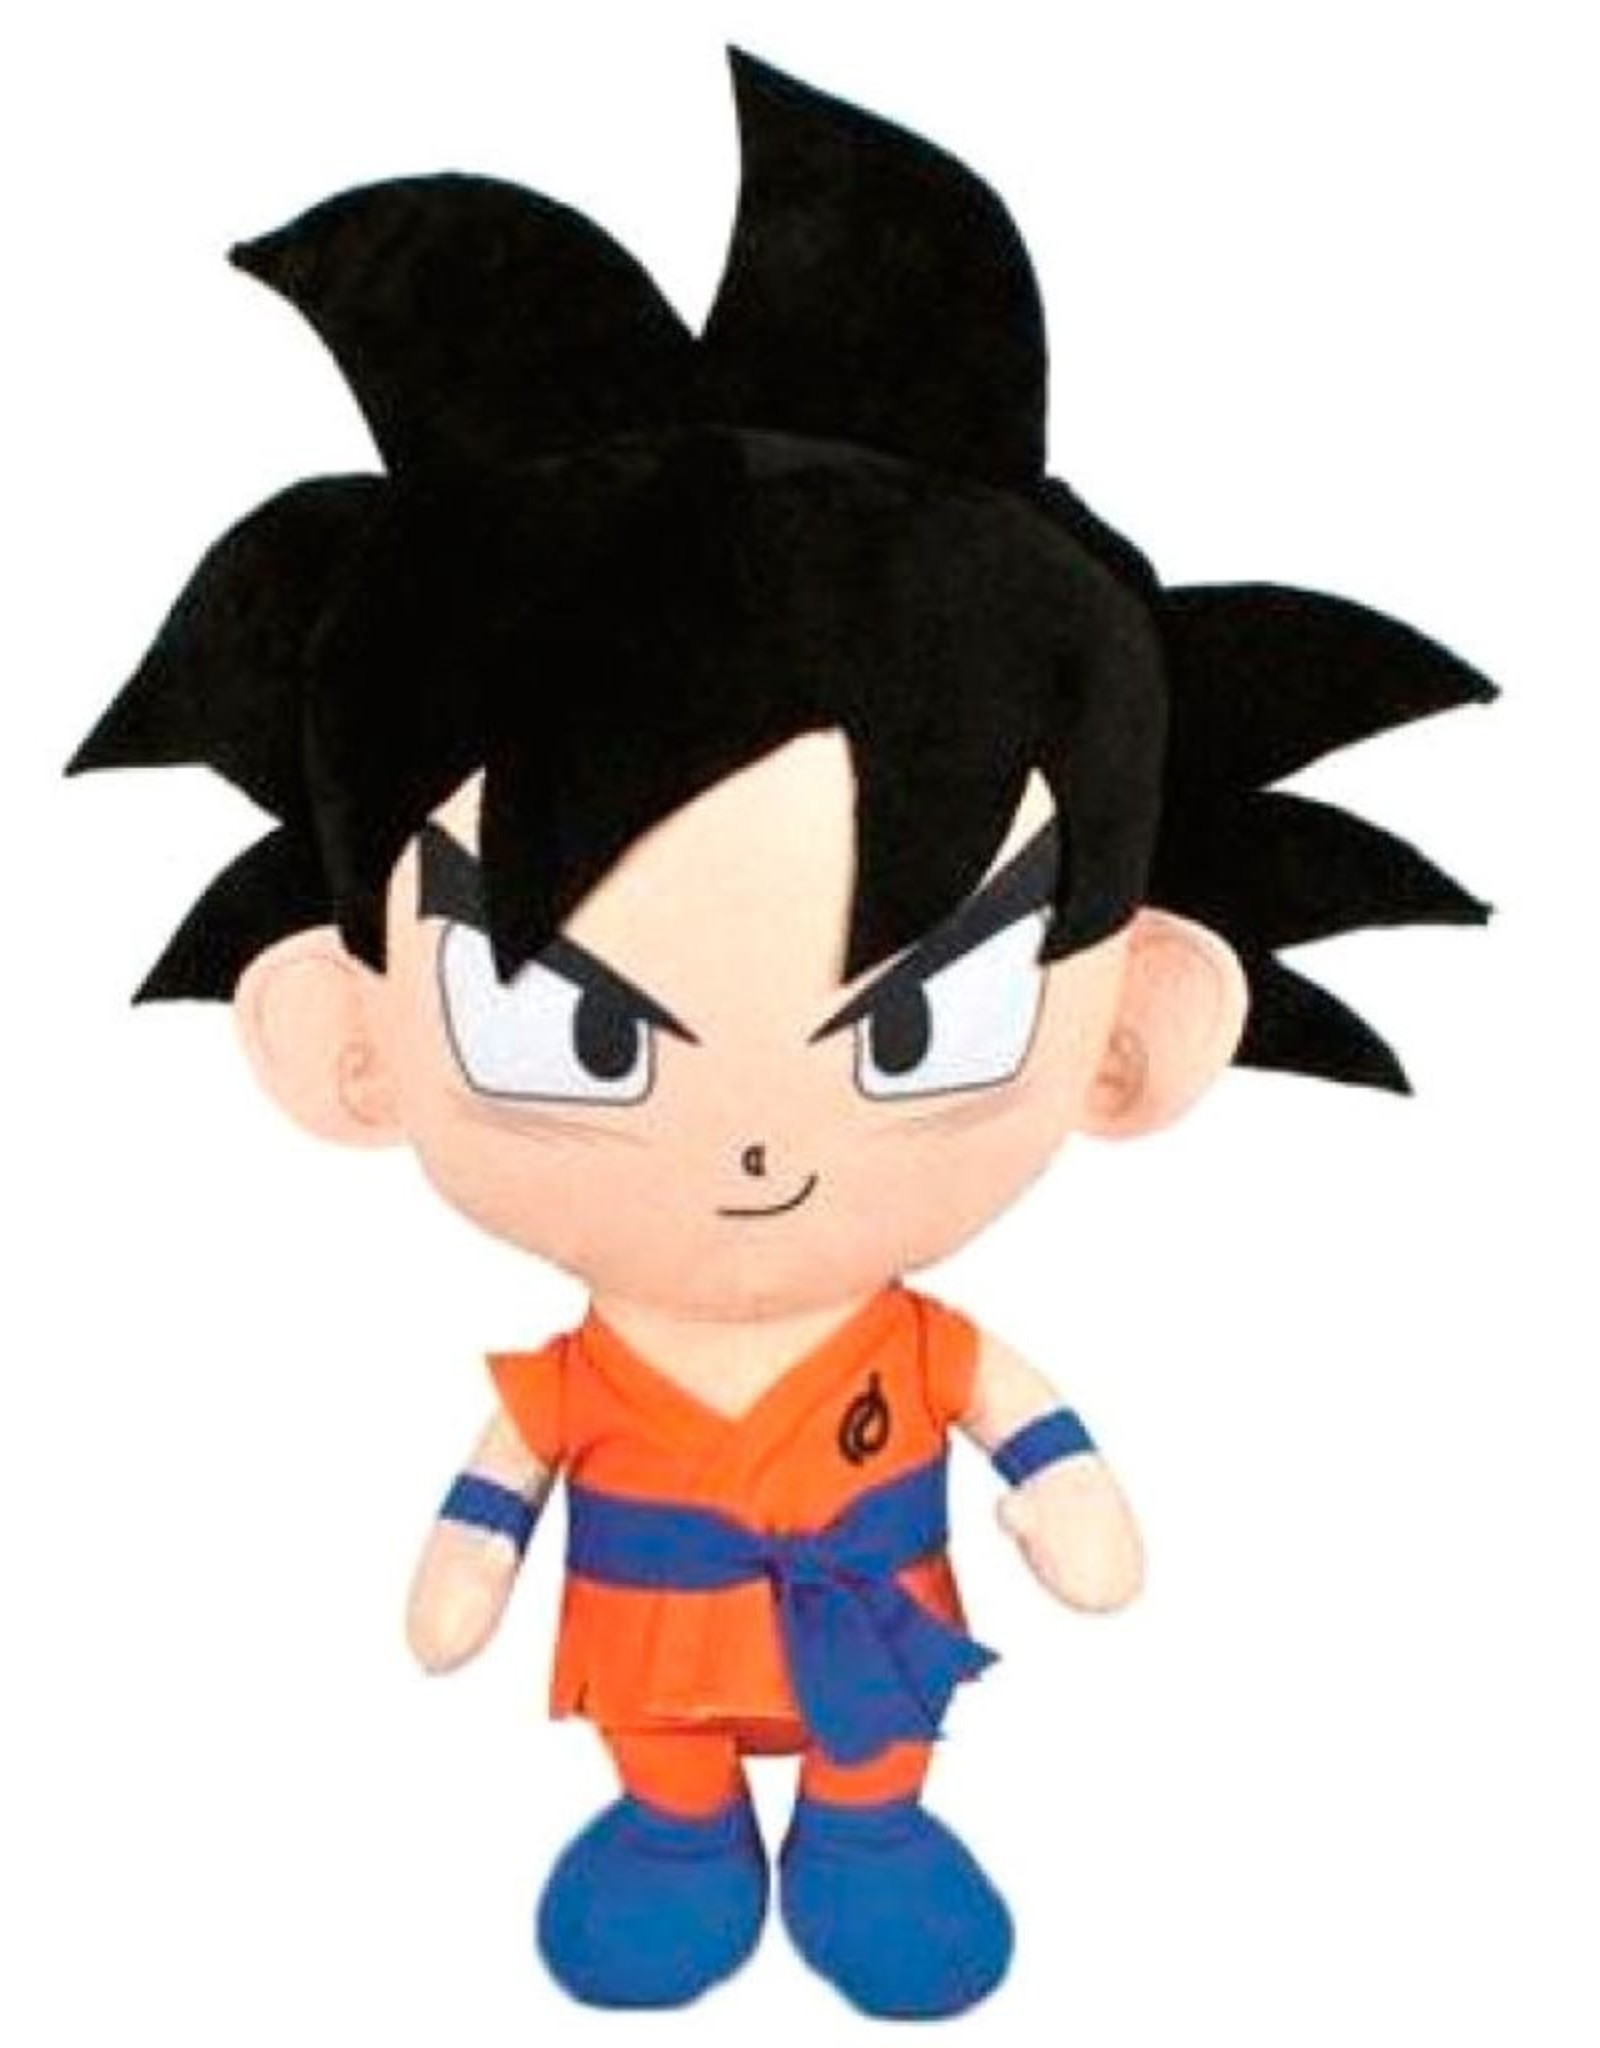 Dragon Ball Merchandise plush and figurines - Dragon Ball Super Goku Black plush toy 24cm